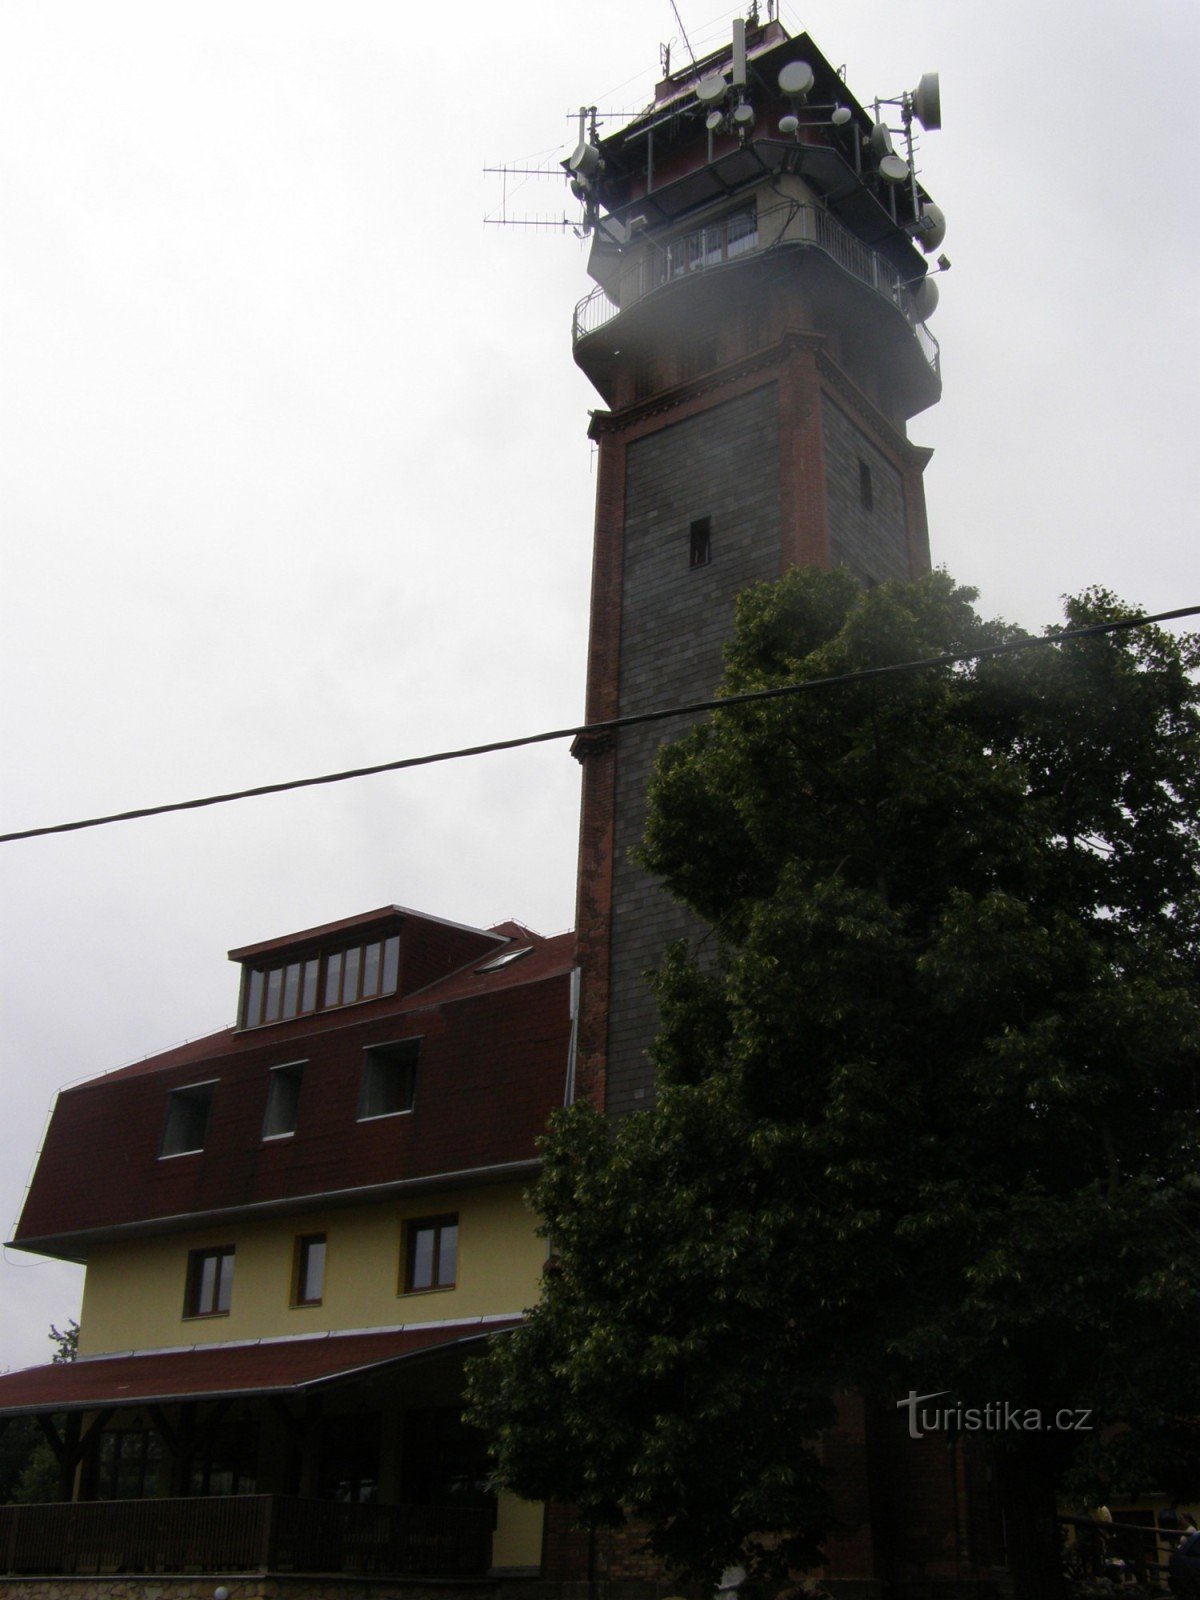 Tábor - Tichánk lookout tower